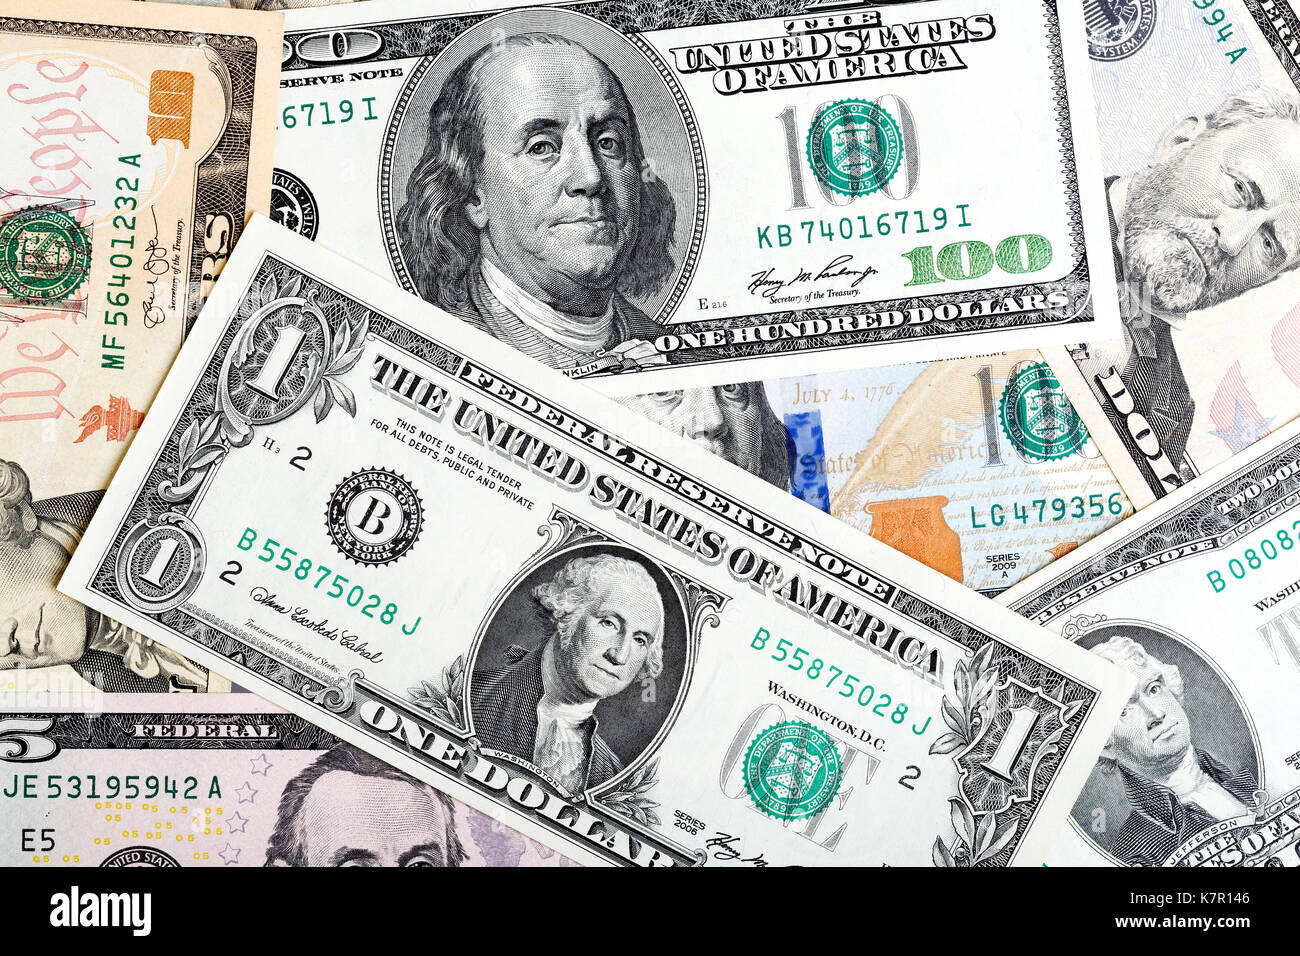 Dollars - United States of America money. High resolution photo. Stock Photo